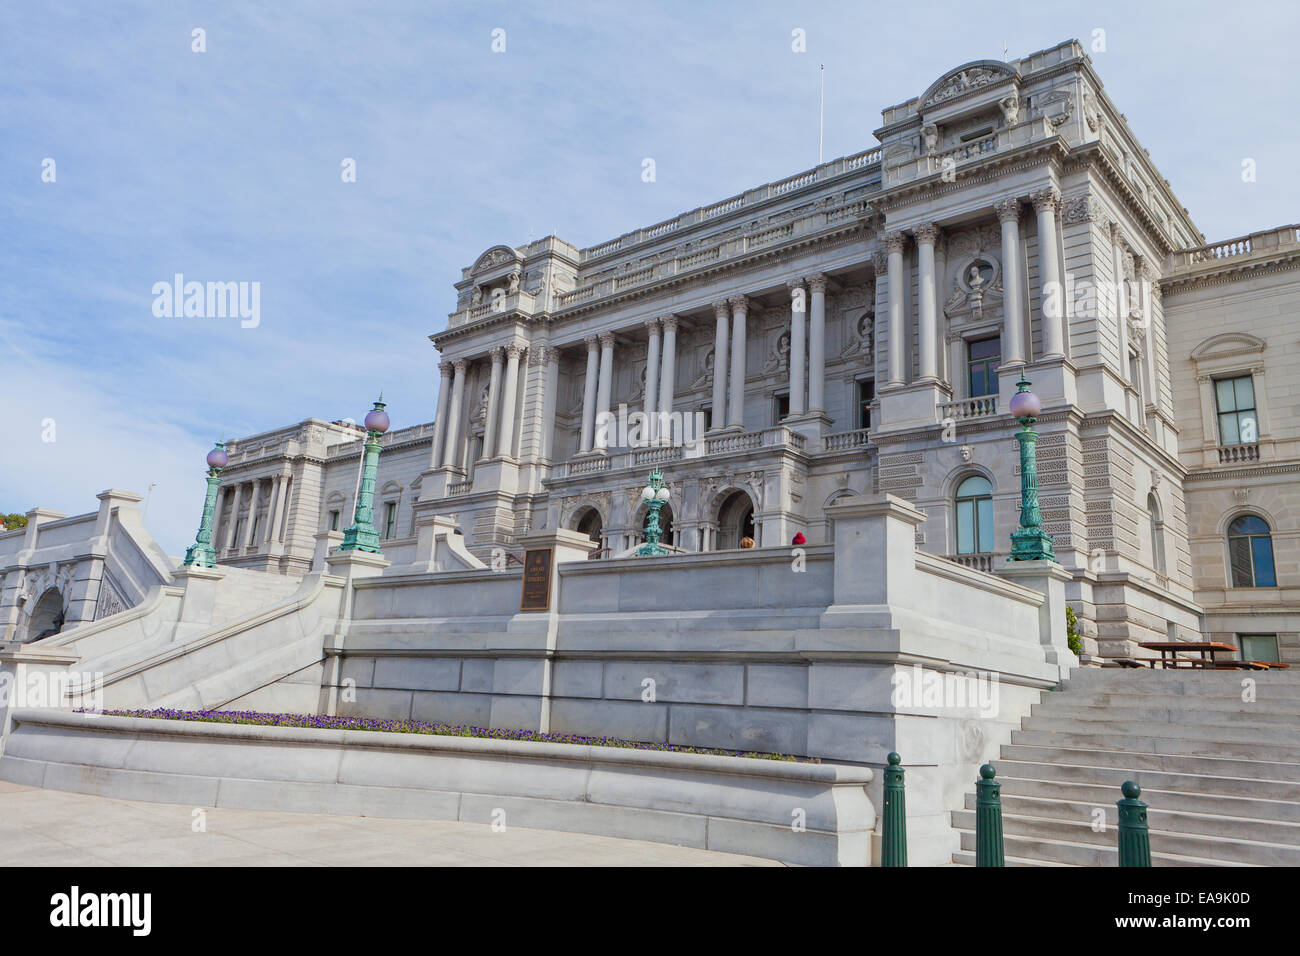 Library of Congress - Washington, DC USA Stock Photo